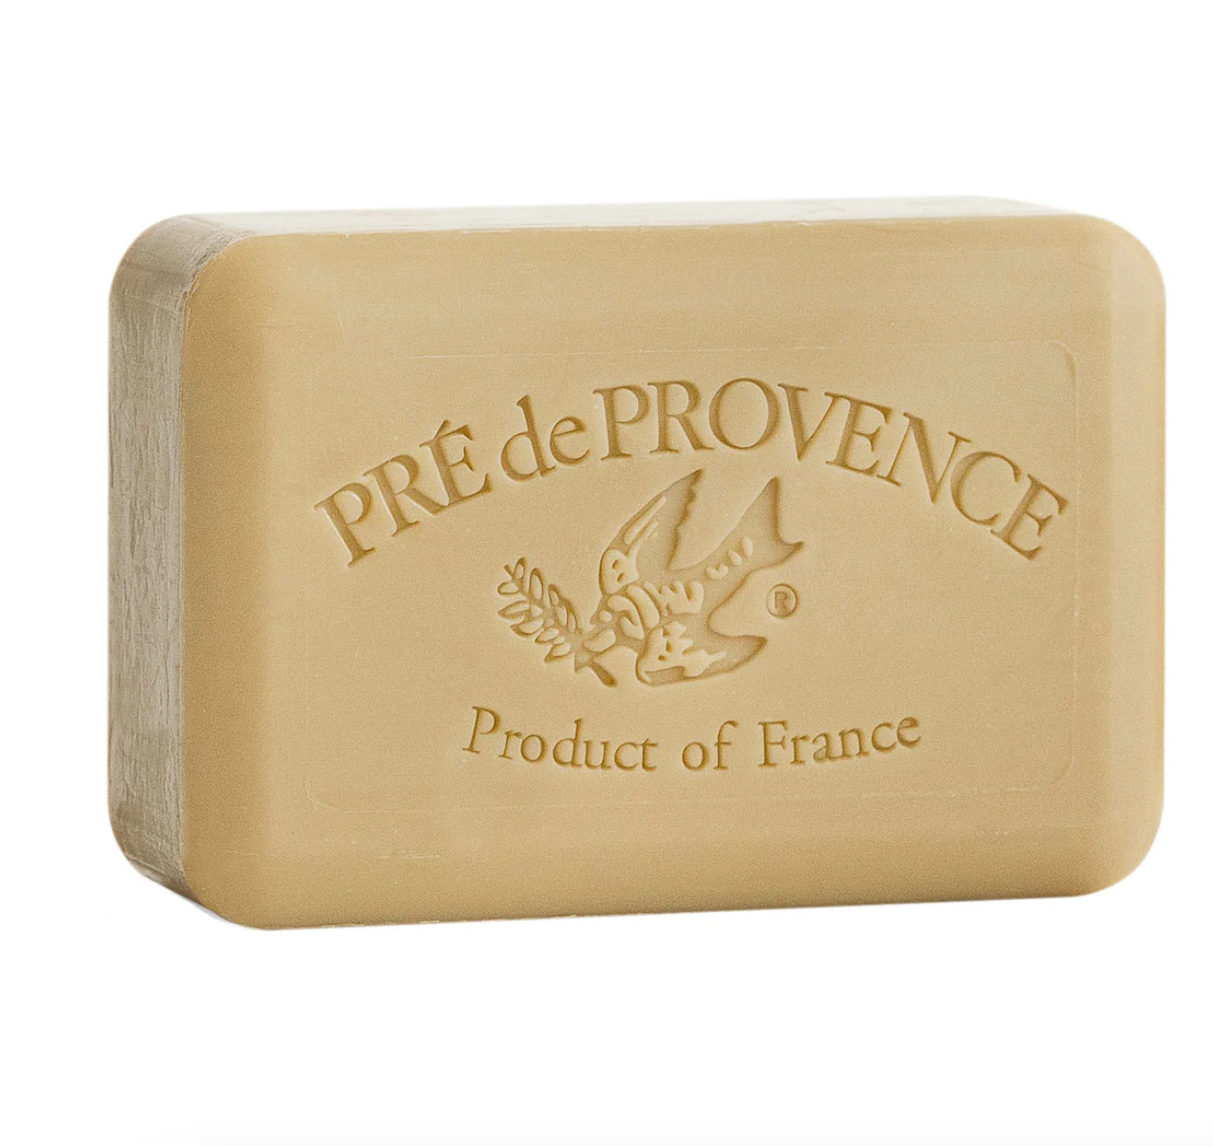 Verbena soap bar by Pré de Provence